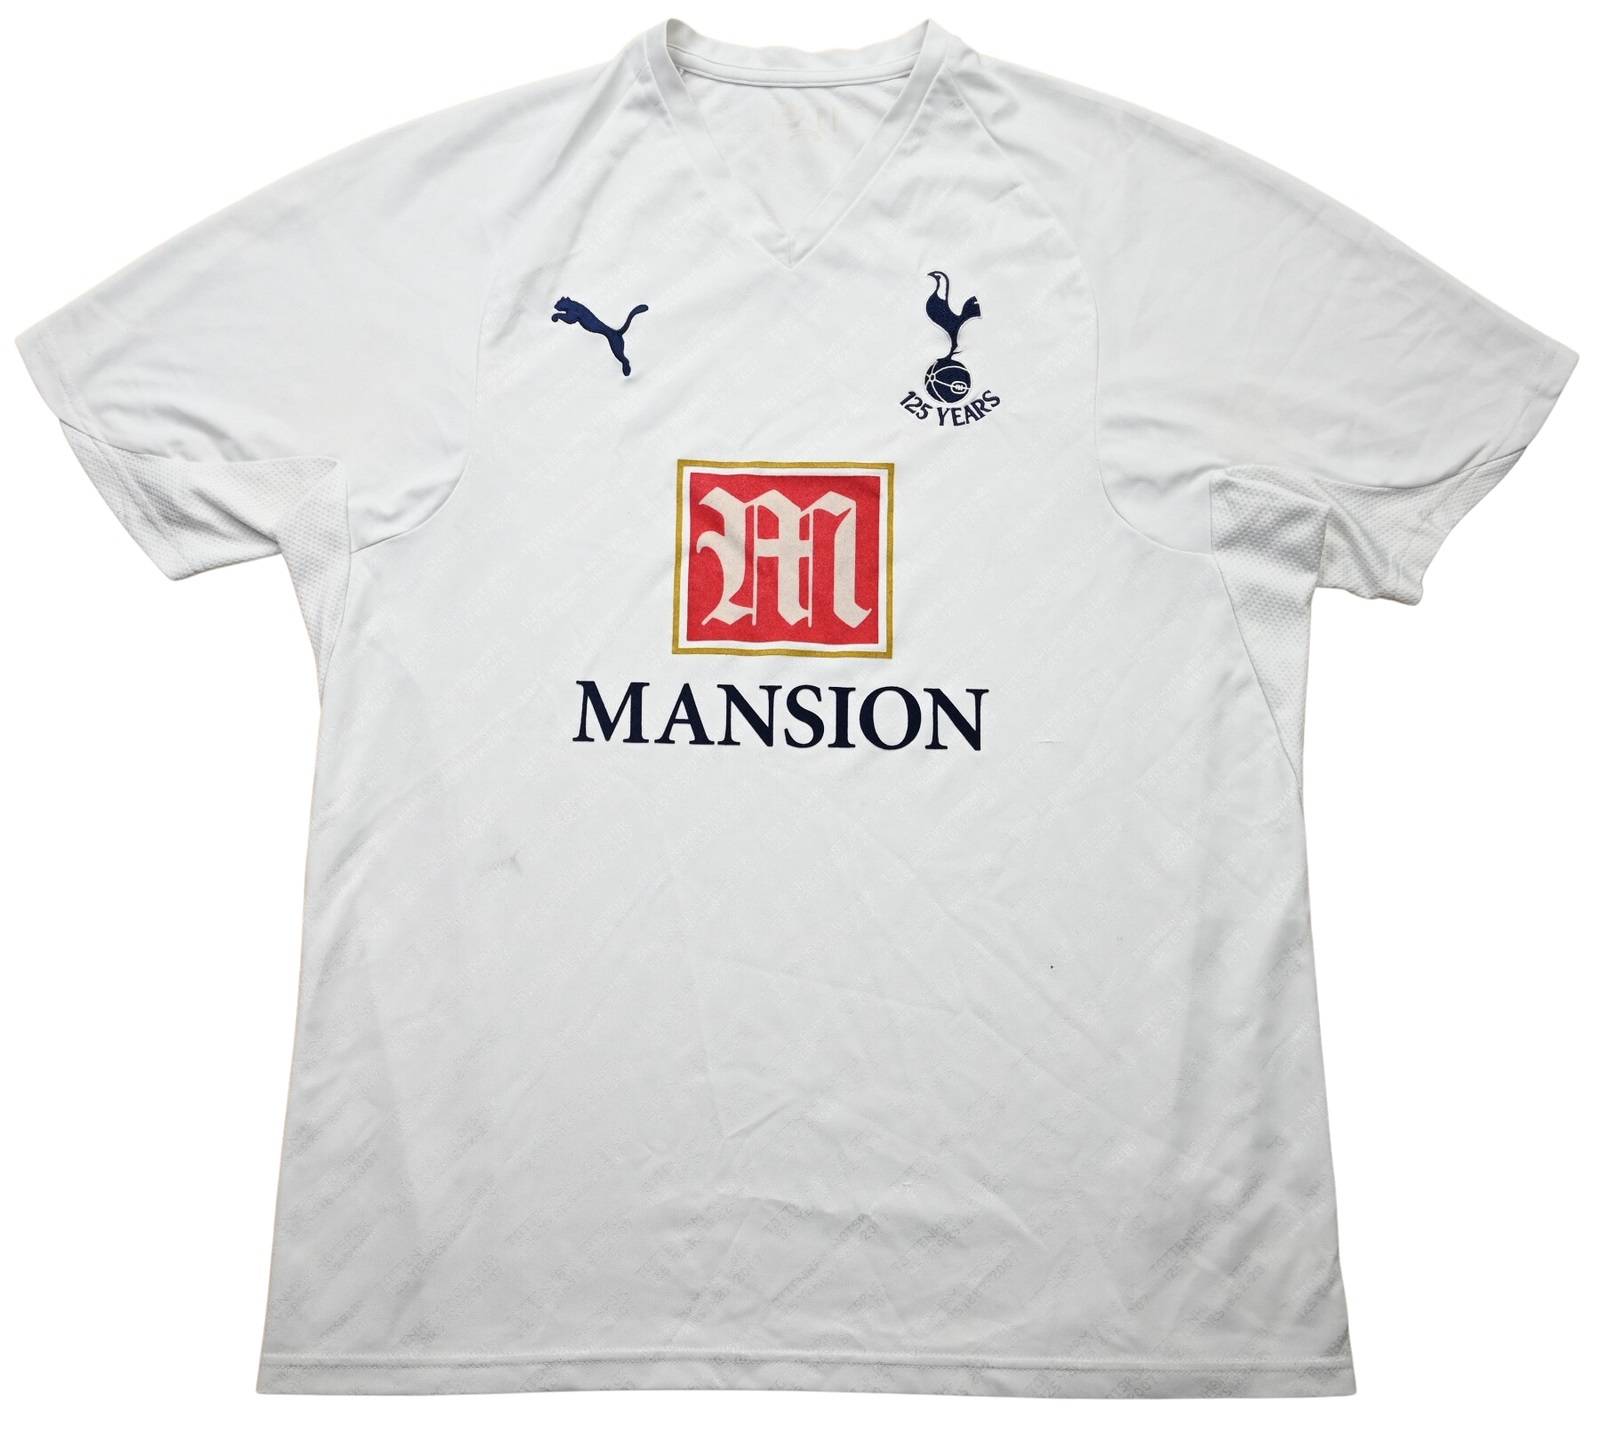 Tottenham Hotspur Official Shirts - Vintage & Clearance Kit